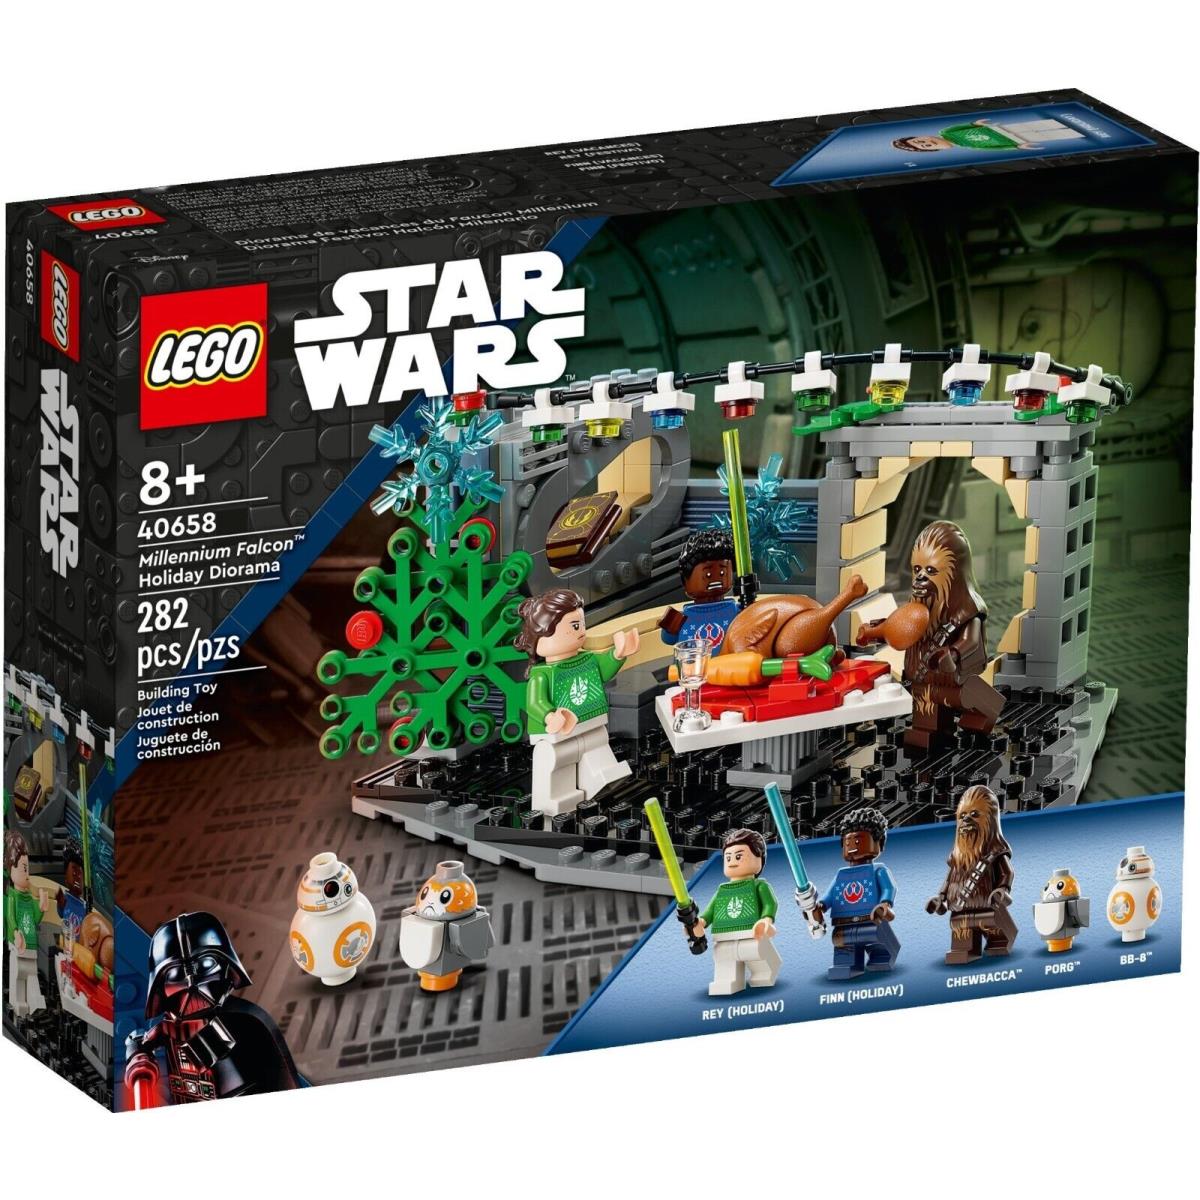 Millennium Falcon Holiday Diorama Lego Star Wars Exclusive 40658